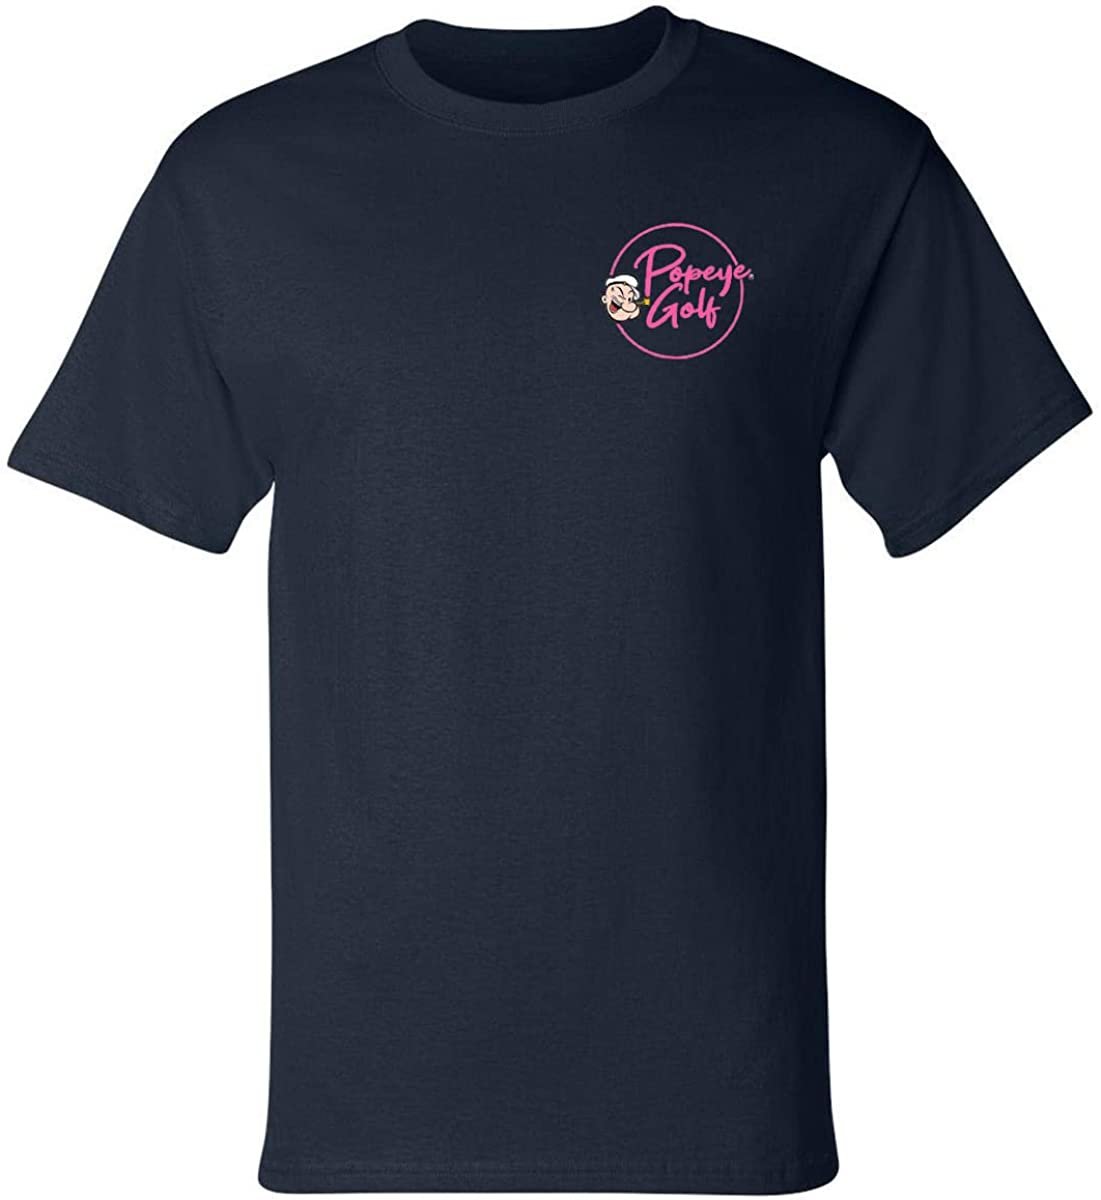 Popeye Golf Men's Silhouette Print T-Shirt